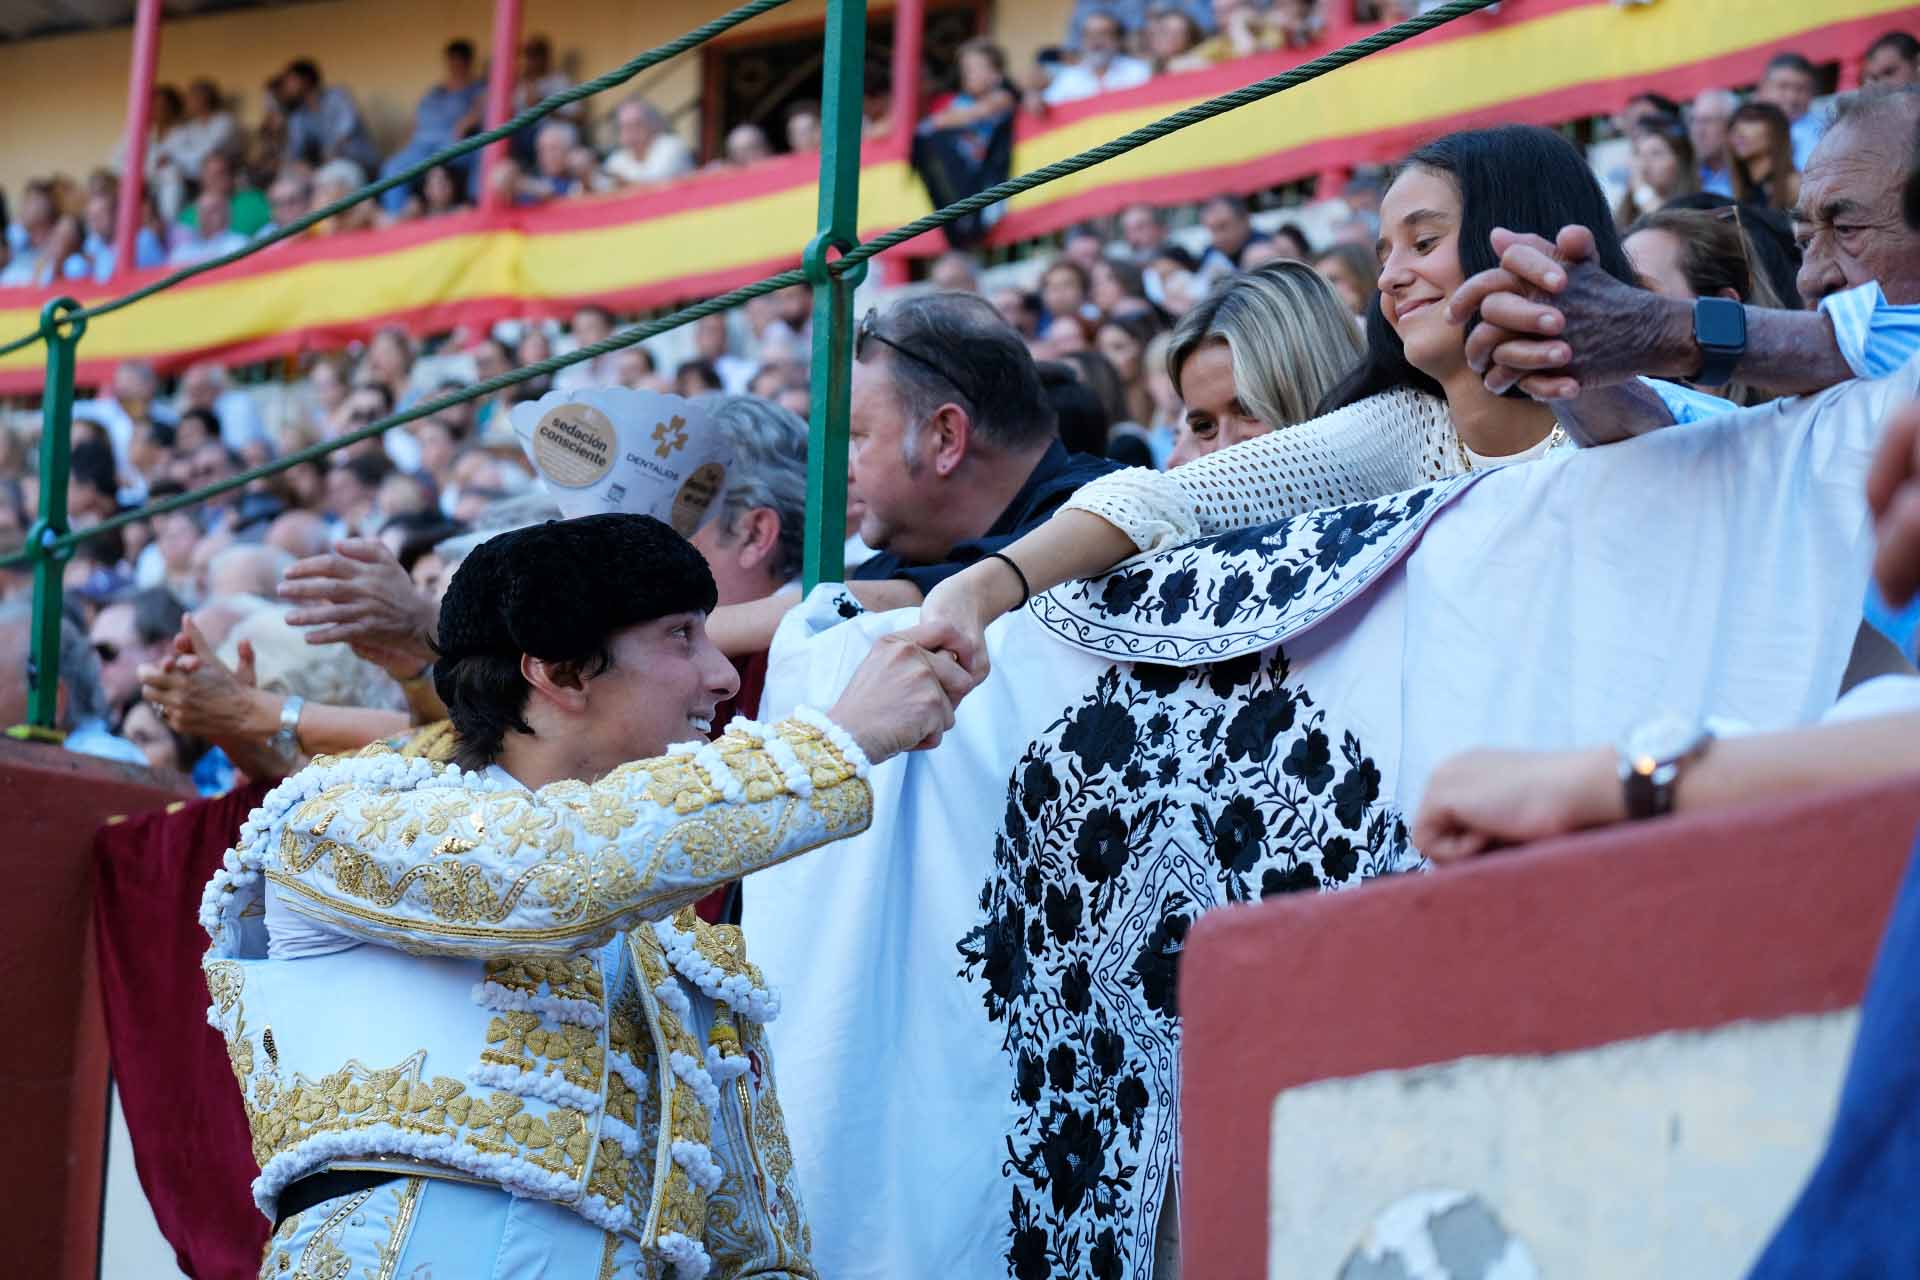 Bullfigh Andres Roca Rey and Victoria Federica de Marichalar during bullfighting in Valladolid